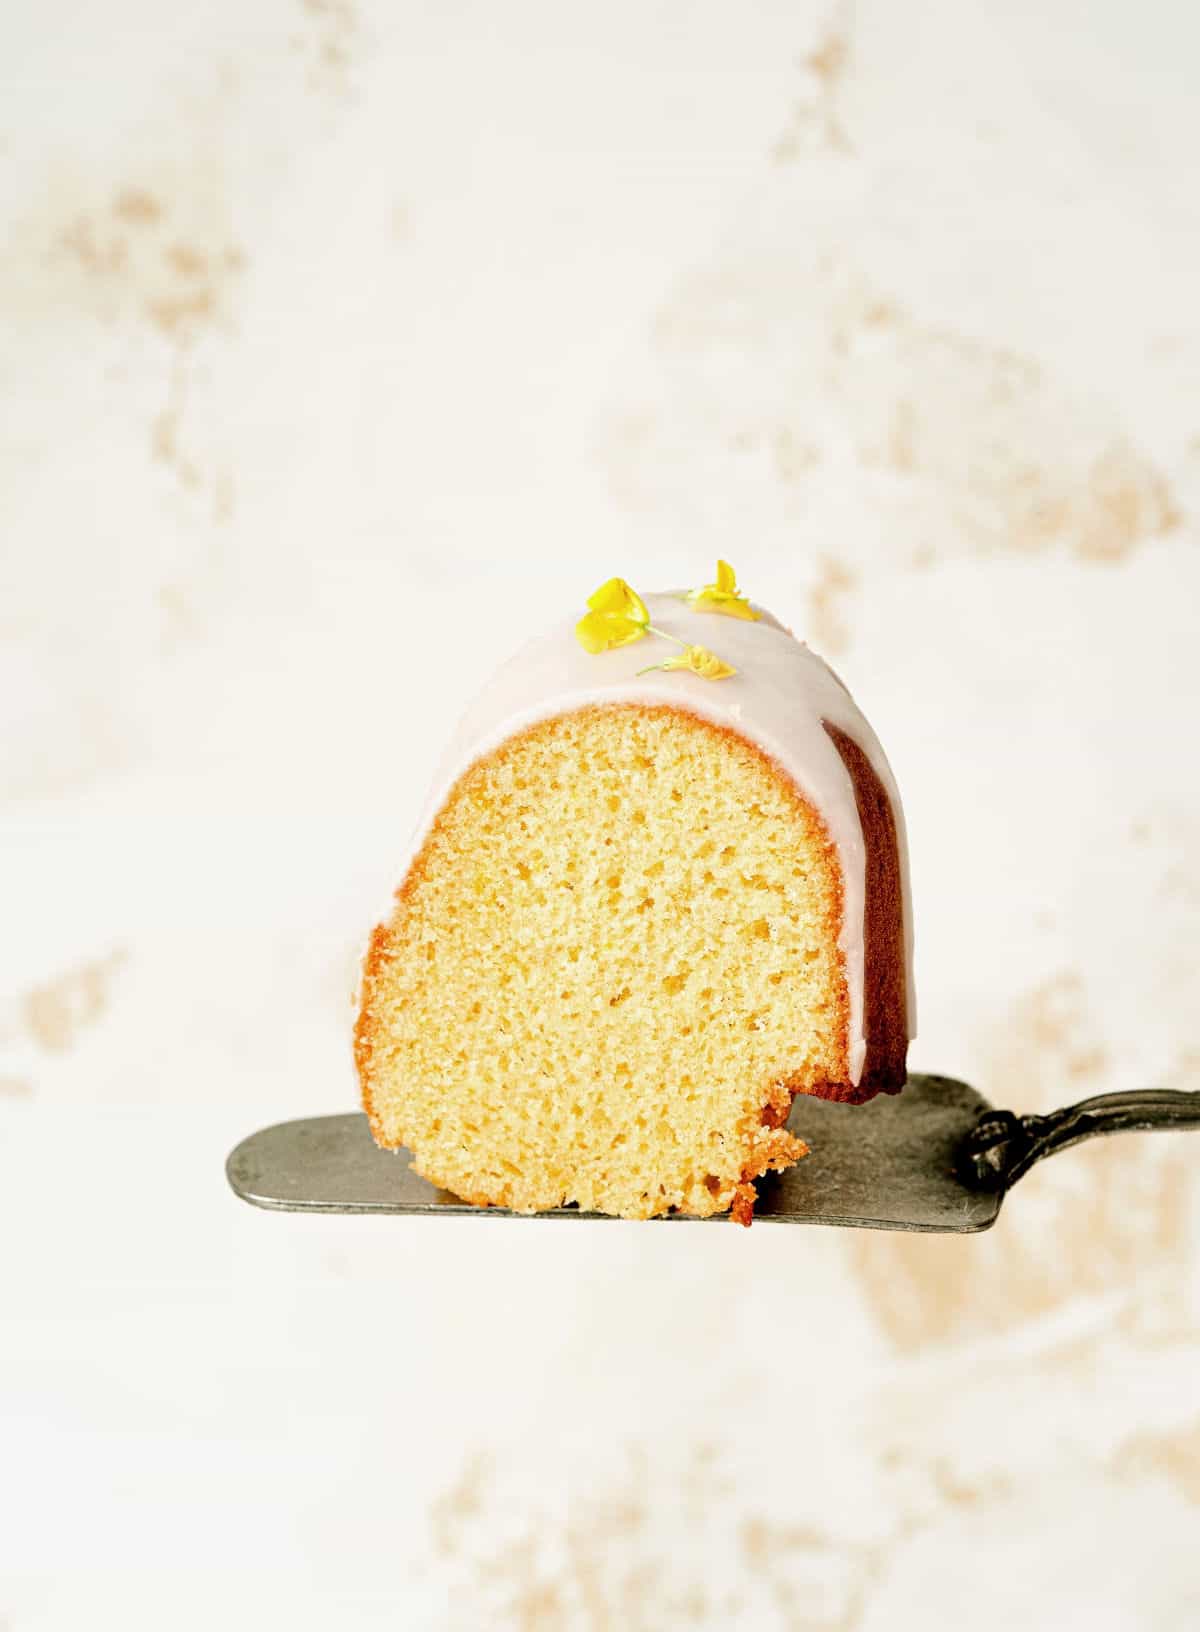 Single slice of glazed lemon bundt cake on a silver cake server. White and beige background.